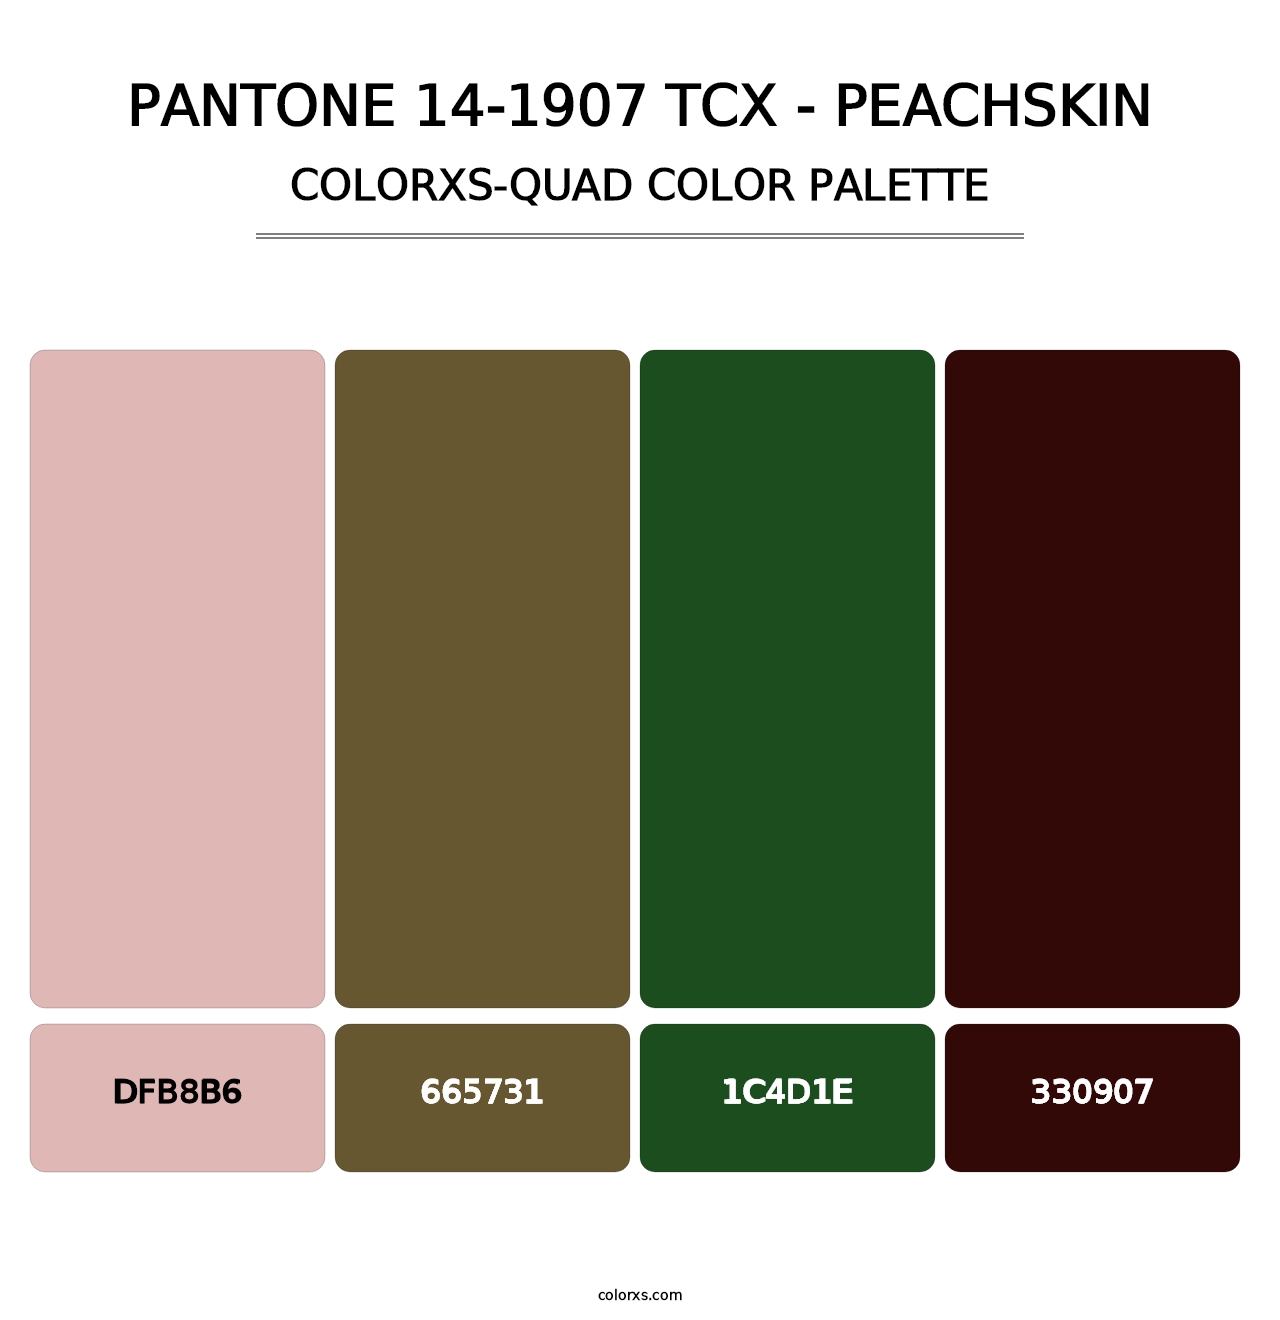 PANTONE 14-1907 TCX - Peachskin - Colorxs Quad Palette